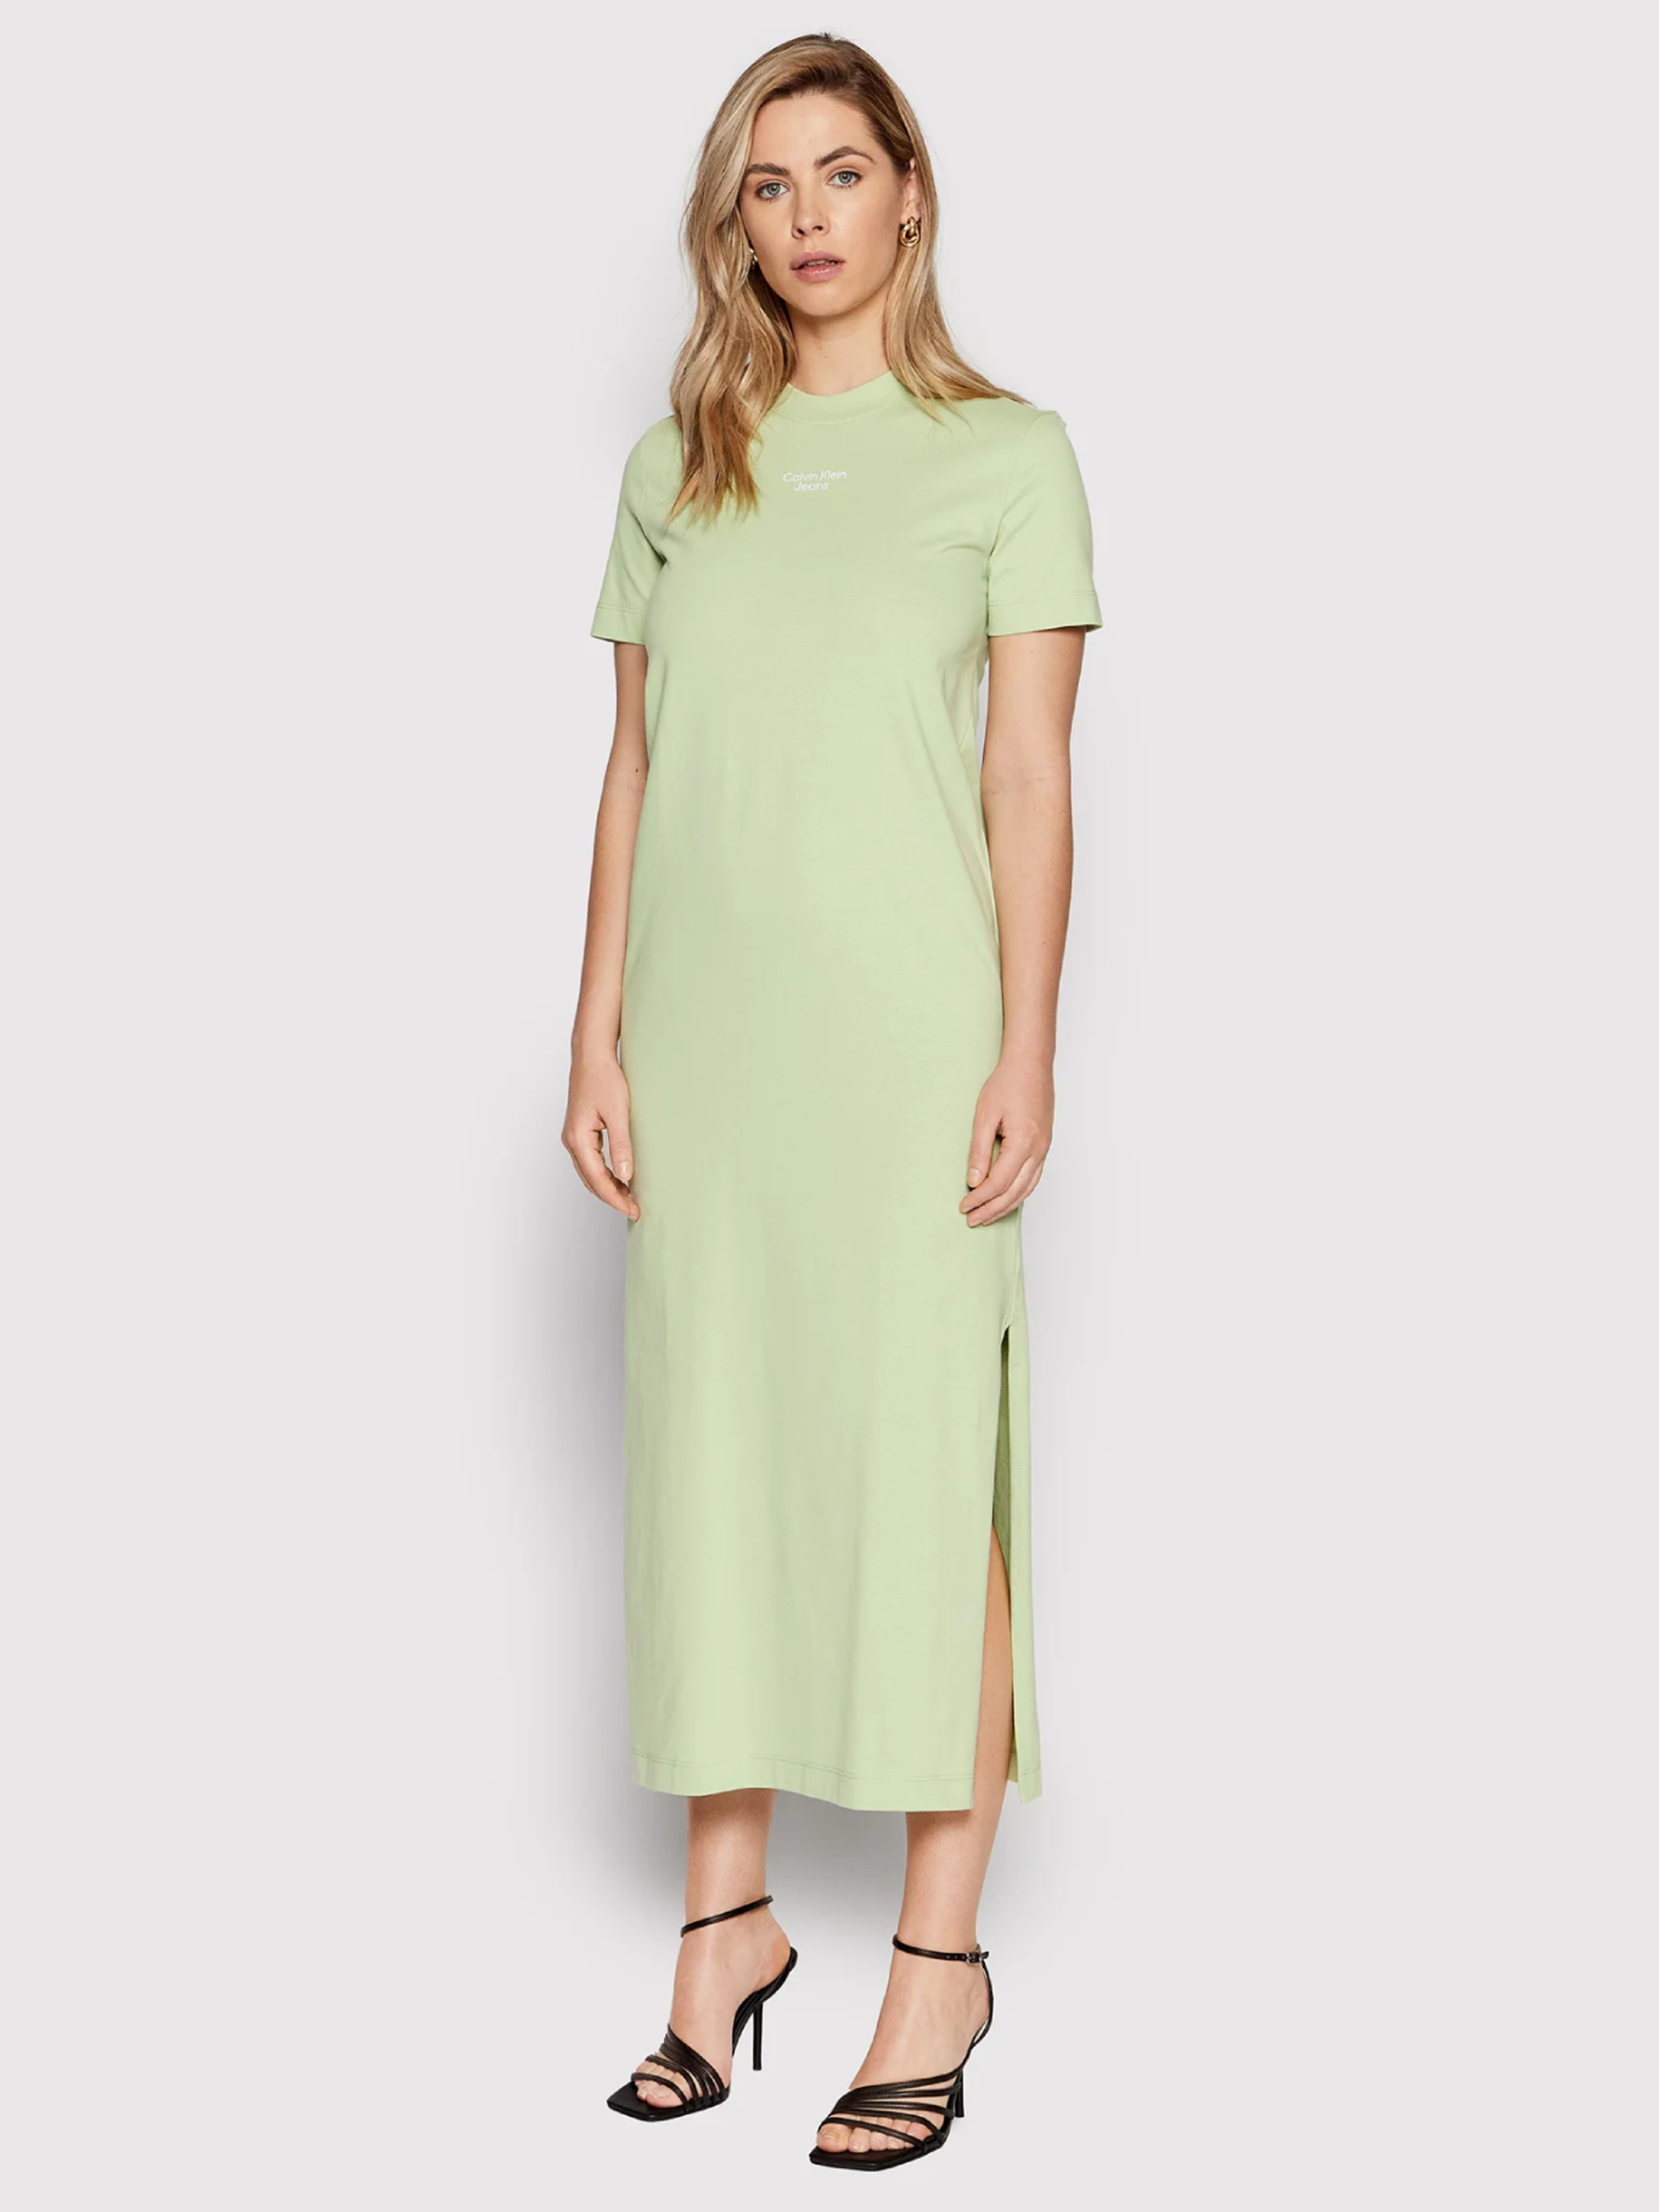 Calvin Klein dámské zelené šaty - S (L99)